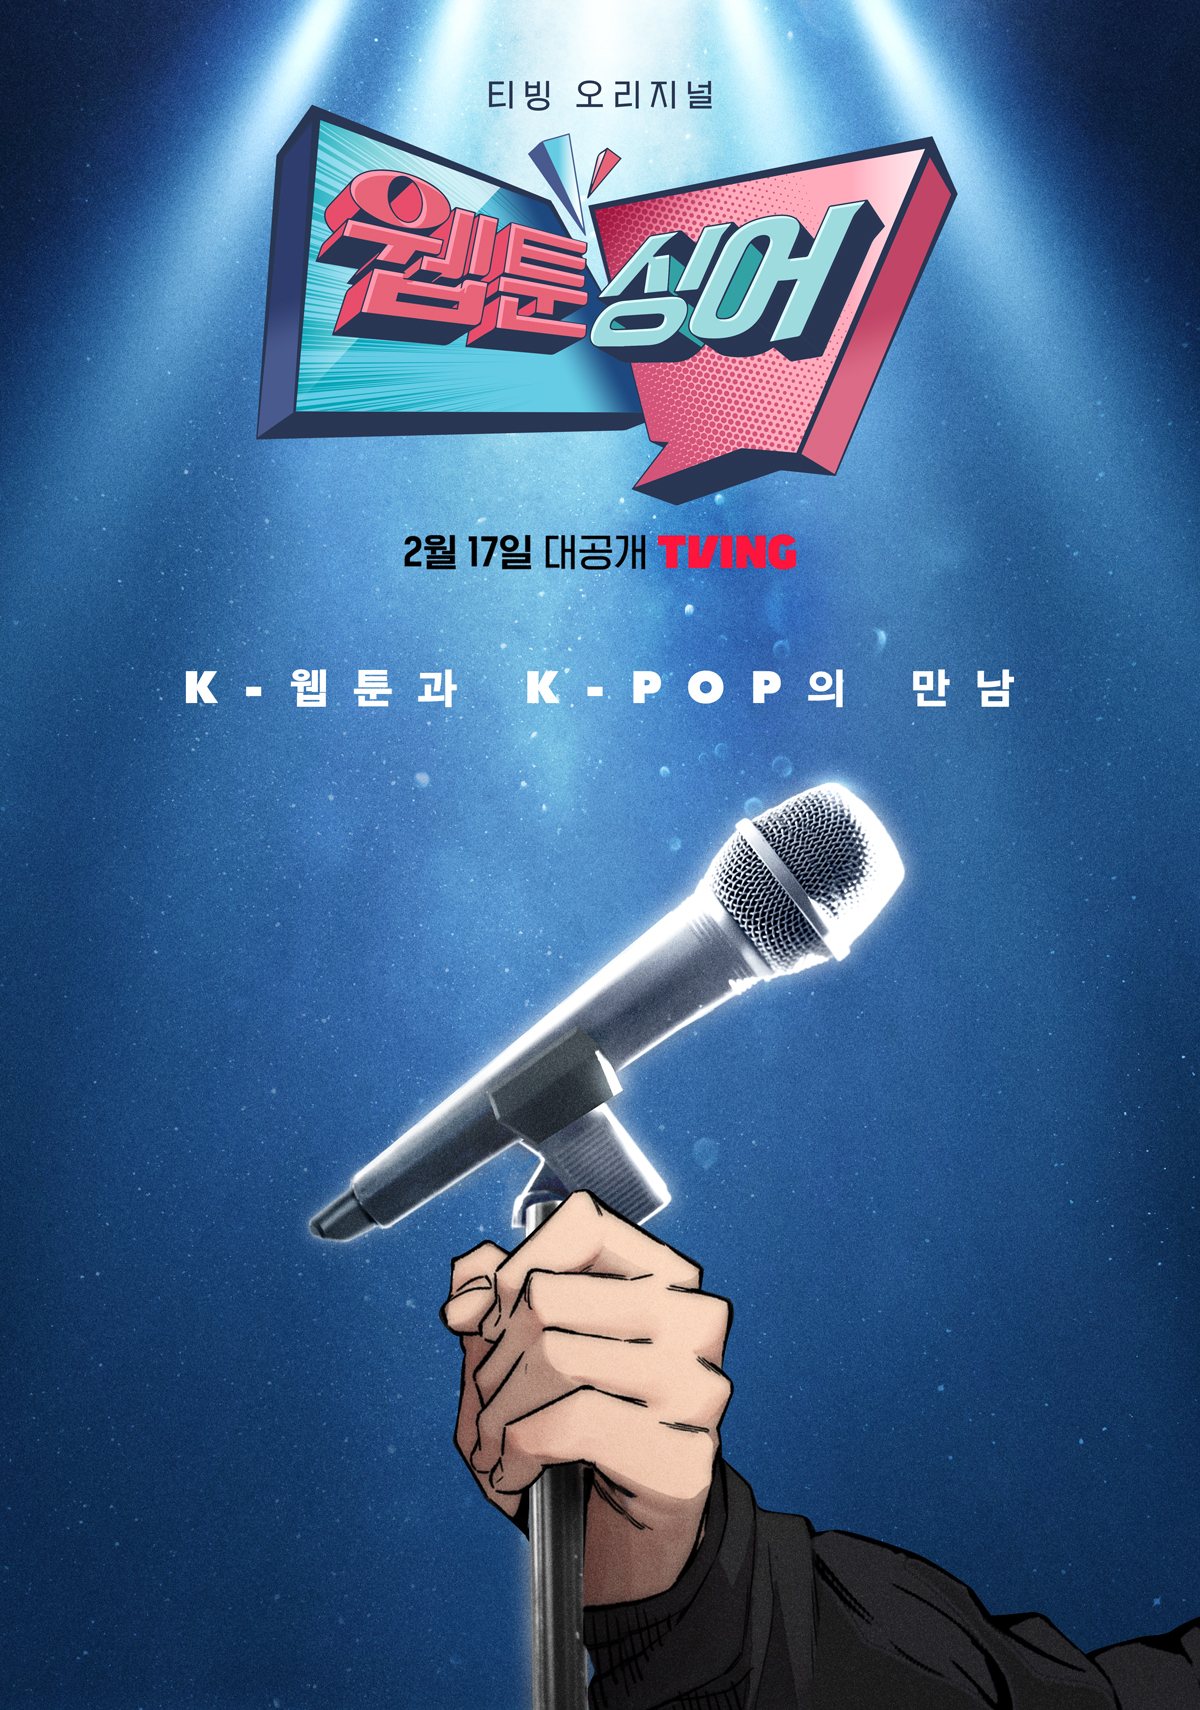 Webtoons, Ok-pop come collectively in Tving’s XR music competitors present ‘Webtoon Singer’